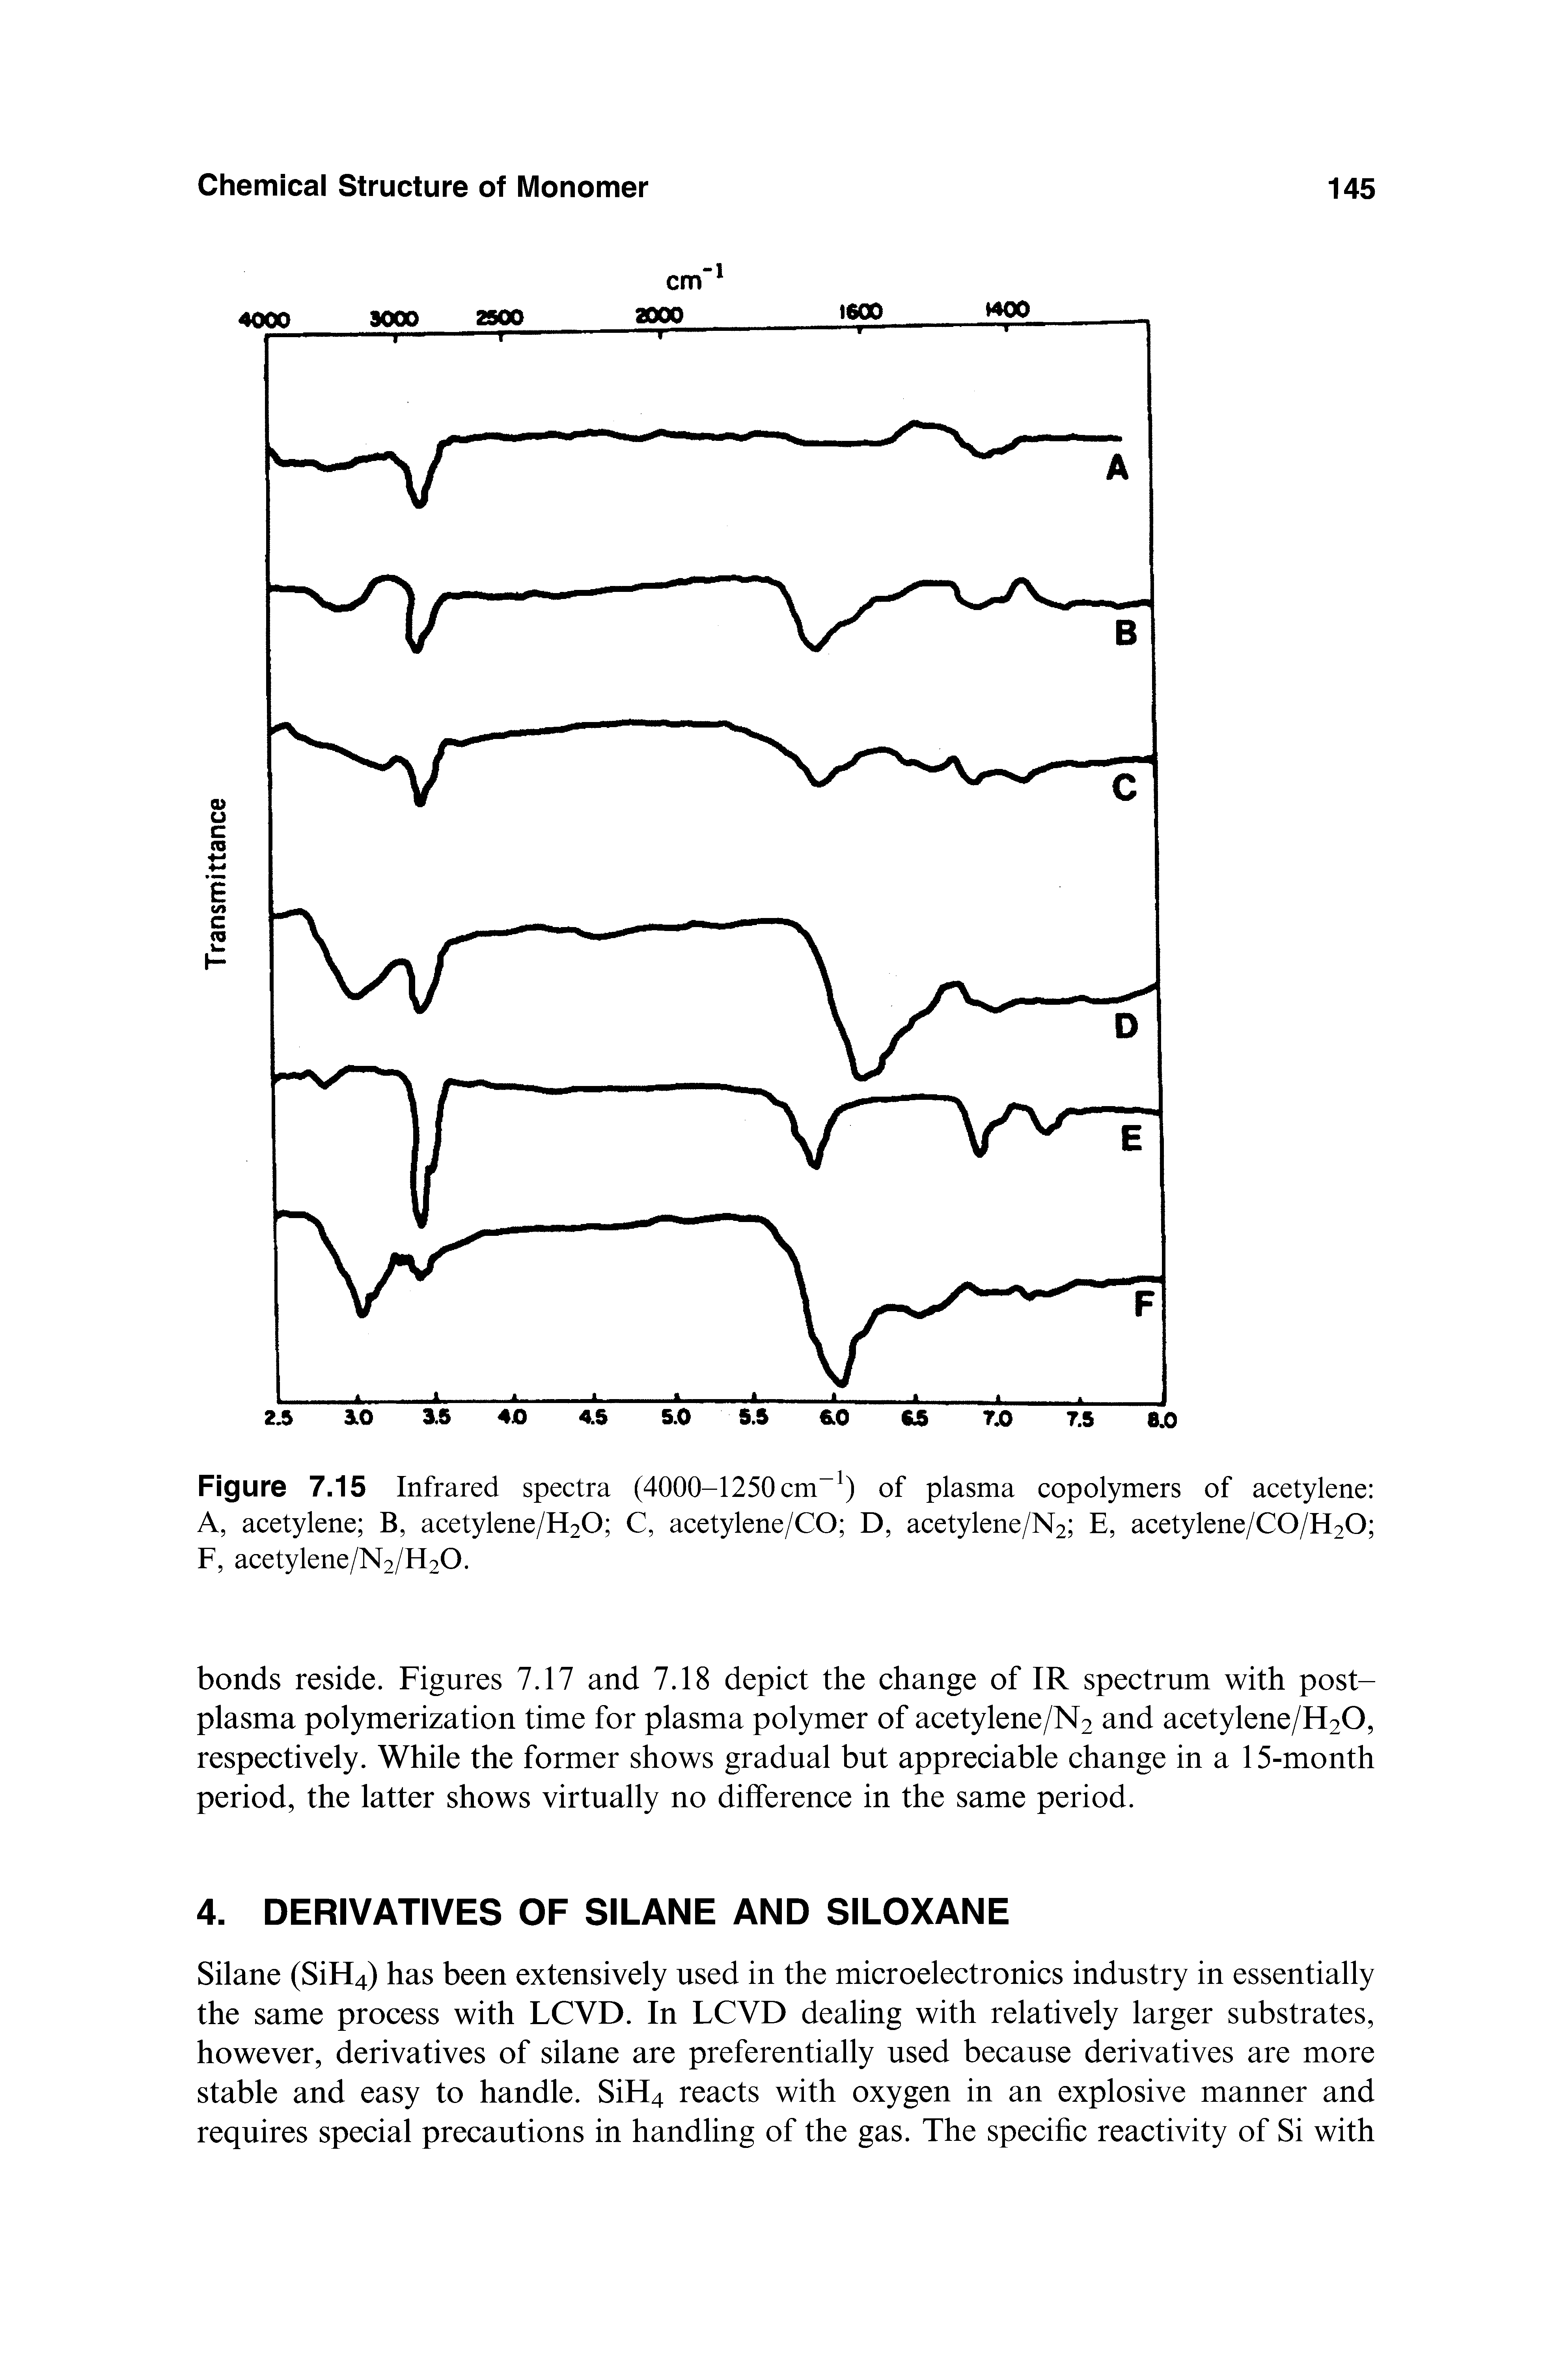 Figure 7.15 Infrared spectra (4000-1250 cm ) of plasma copolymers of acetylene A, acetylene B, acetylene/H20 C, acetylene/CO D, acetylene/N2 E, acetylene/C0/H20 F, acetylene/N2/H20.